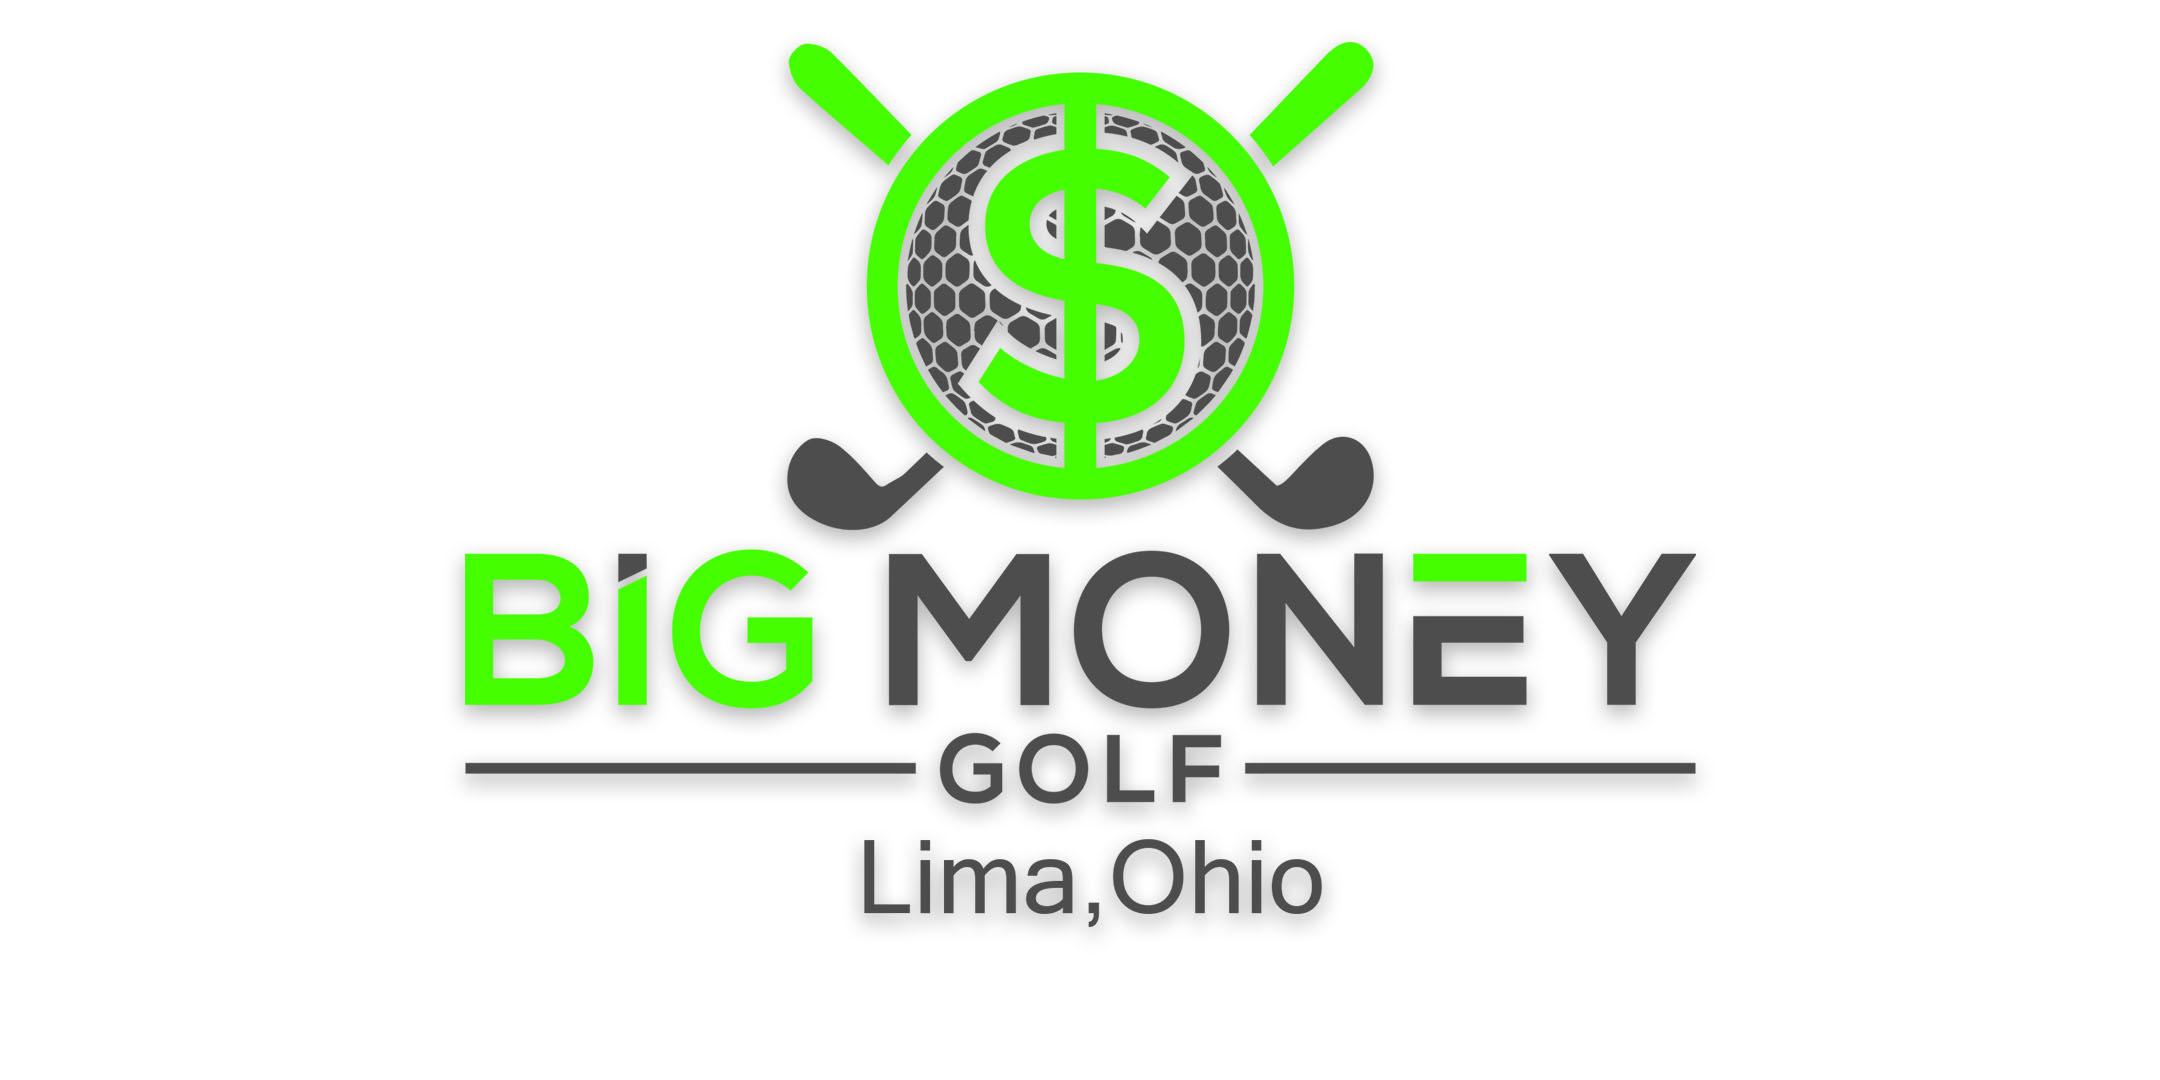 Big Money Golf Scramble - Lima, Ohio - Win $5,000